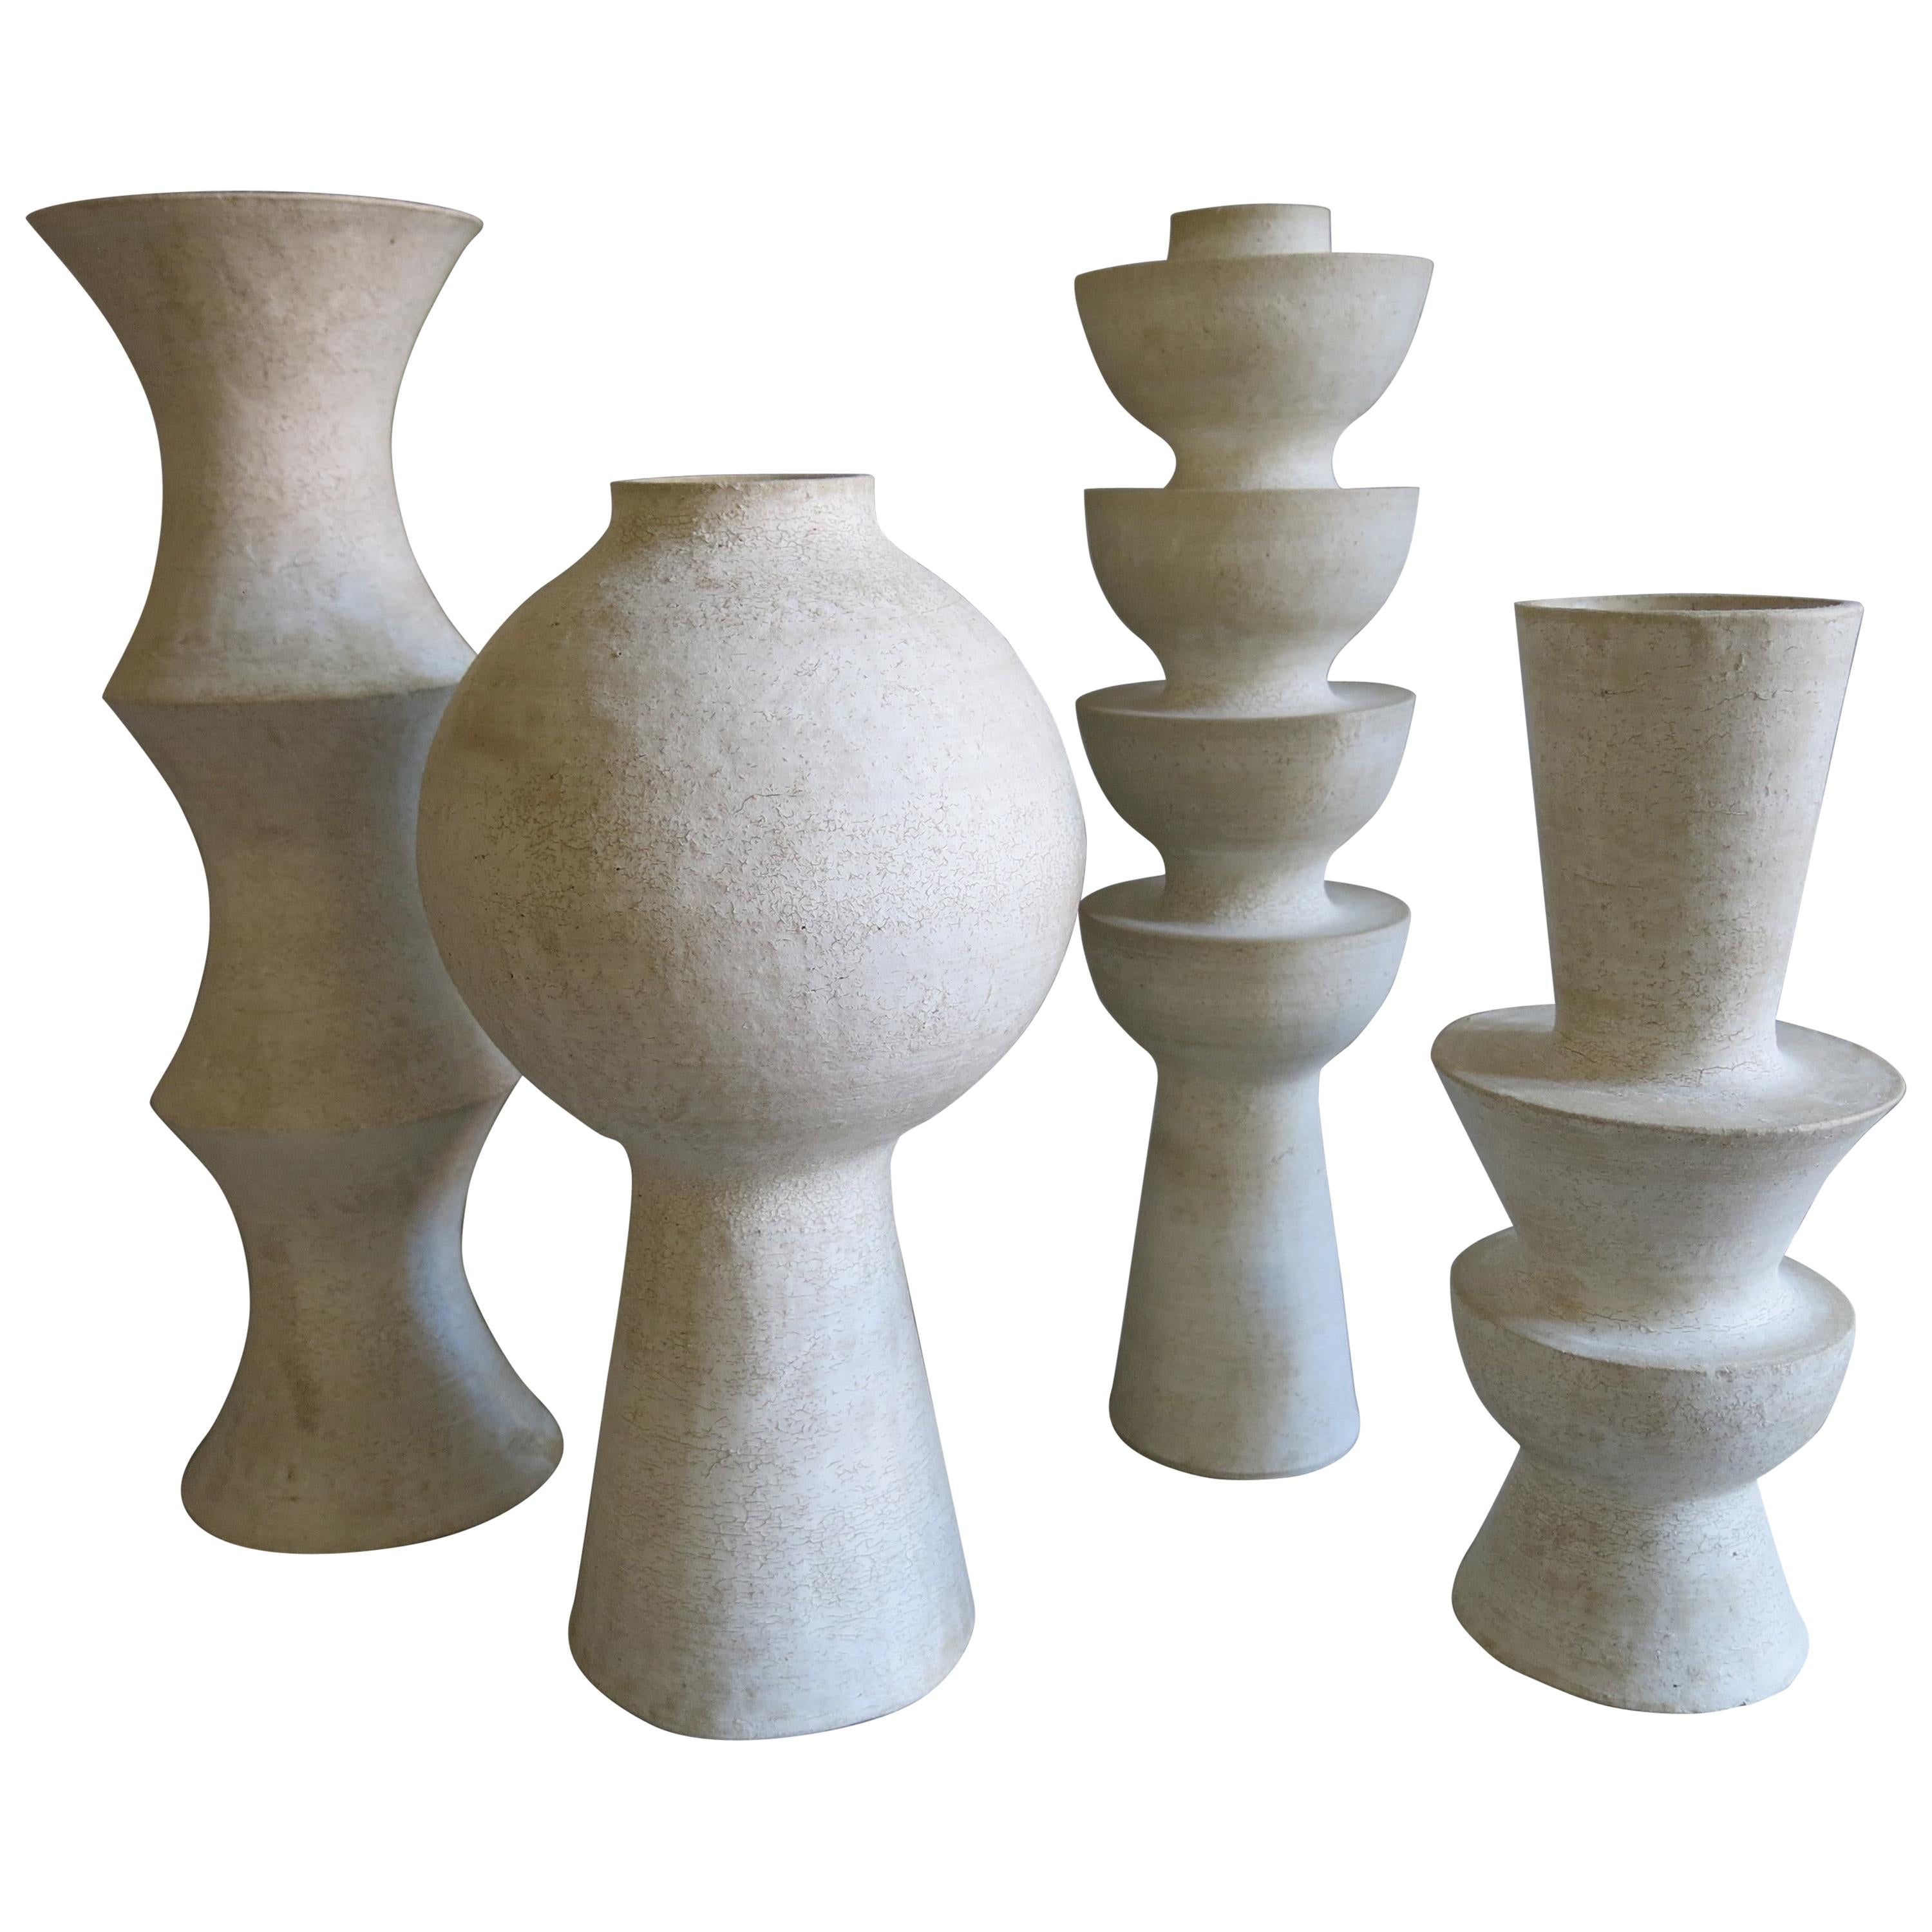 Ensemble of Four Ceramic Vases by John Born